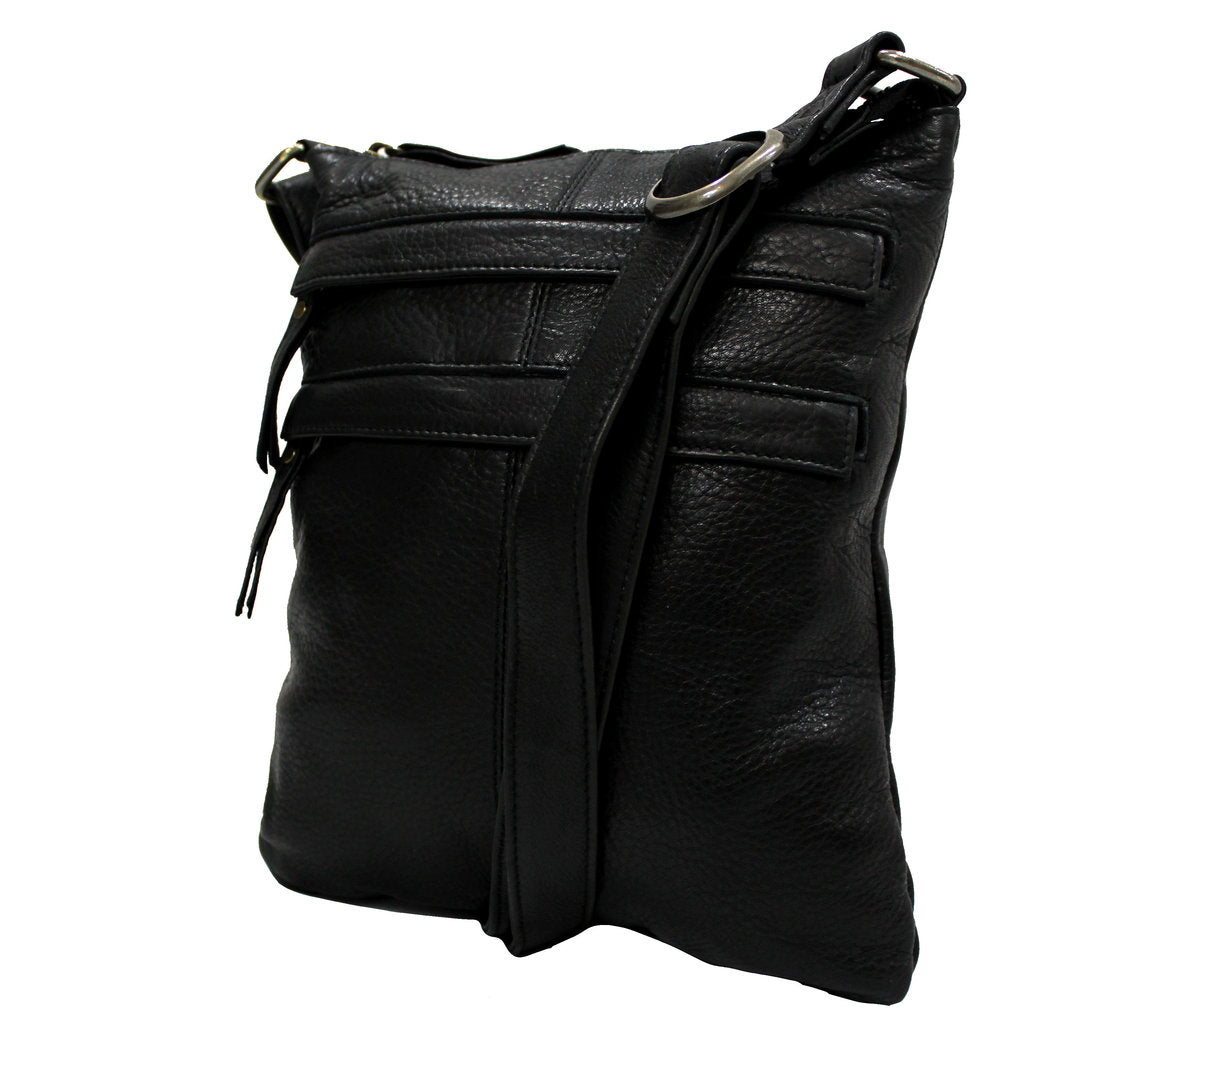 Rugged Hide - Wendy Cross Body Leather Bag - rainbowbags